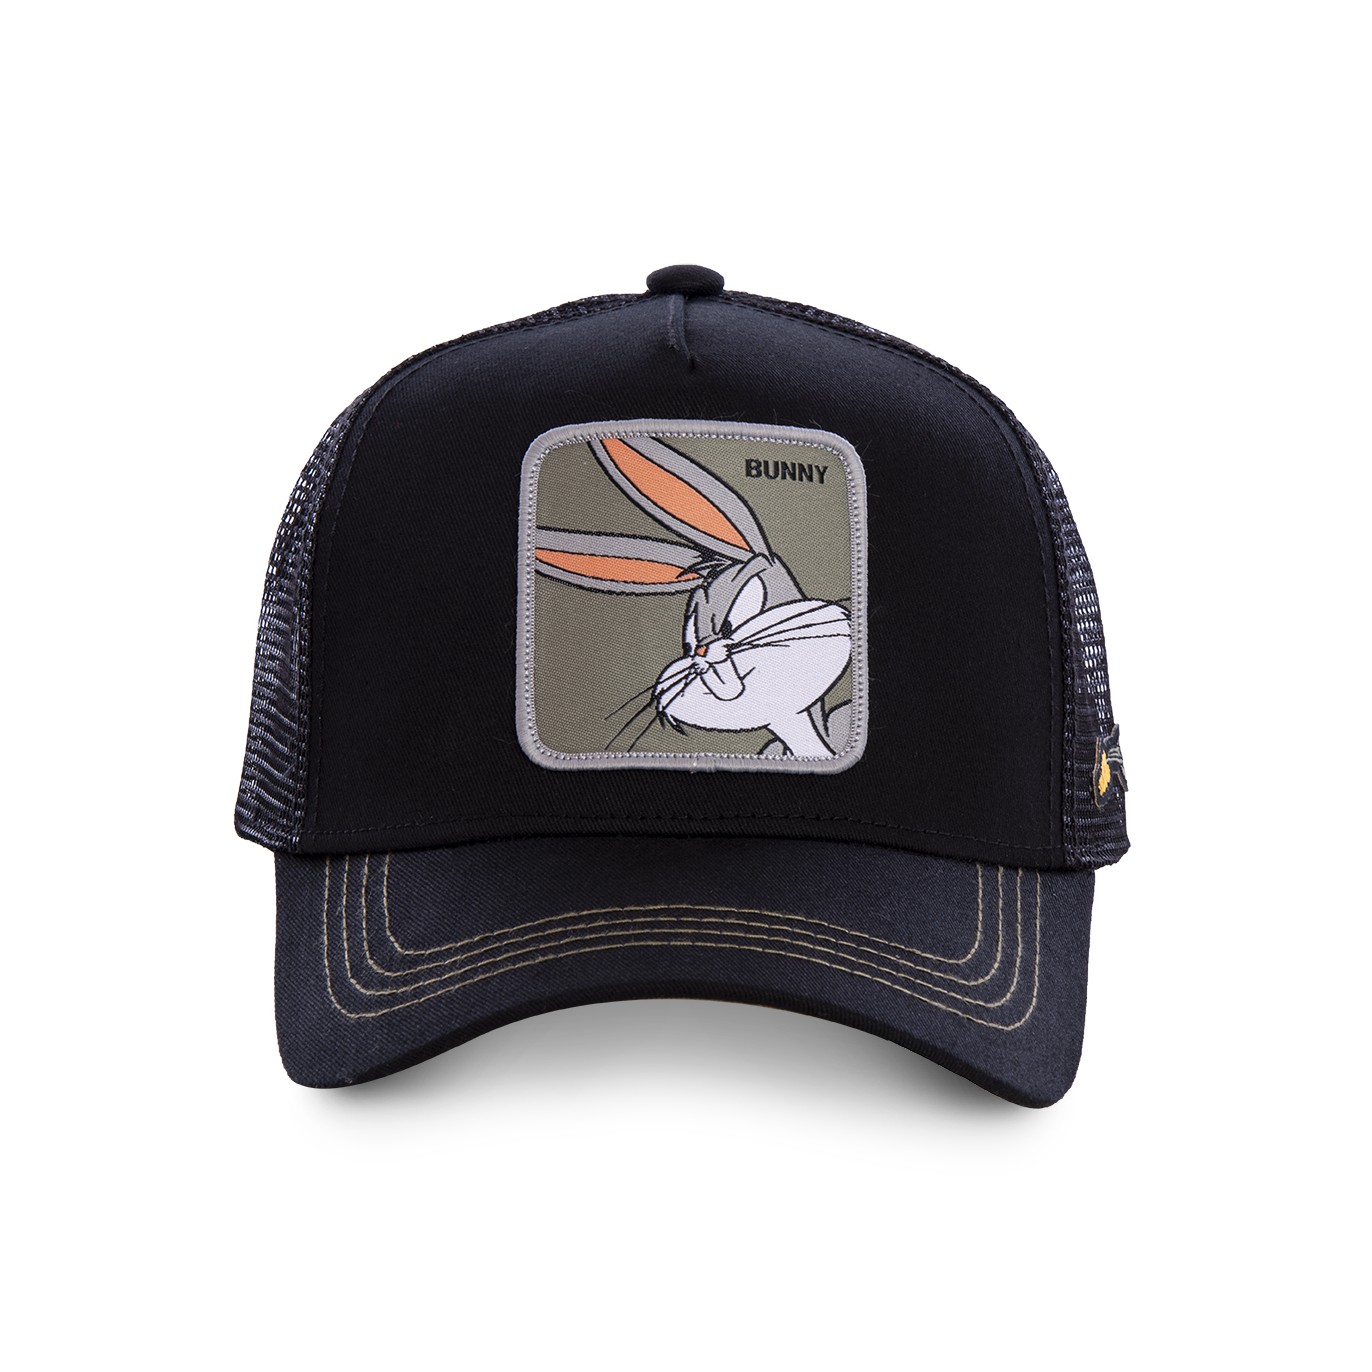 Men's Capslab Looney Tunes Bunny Cap Capslab - 2